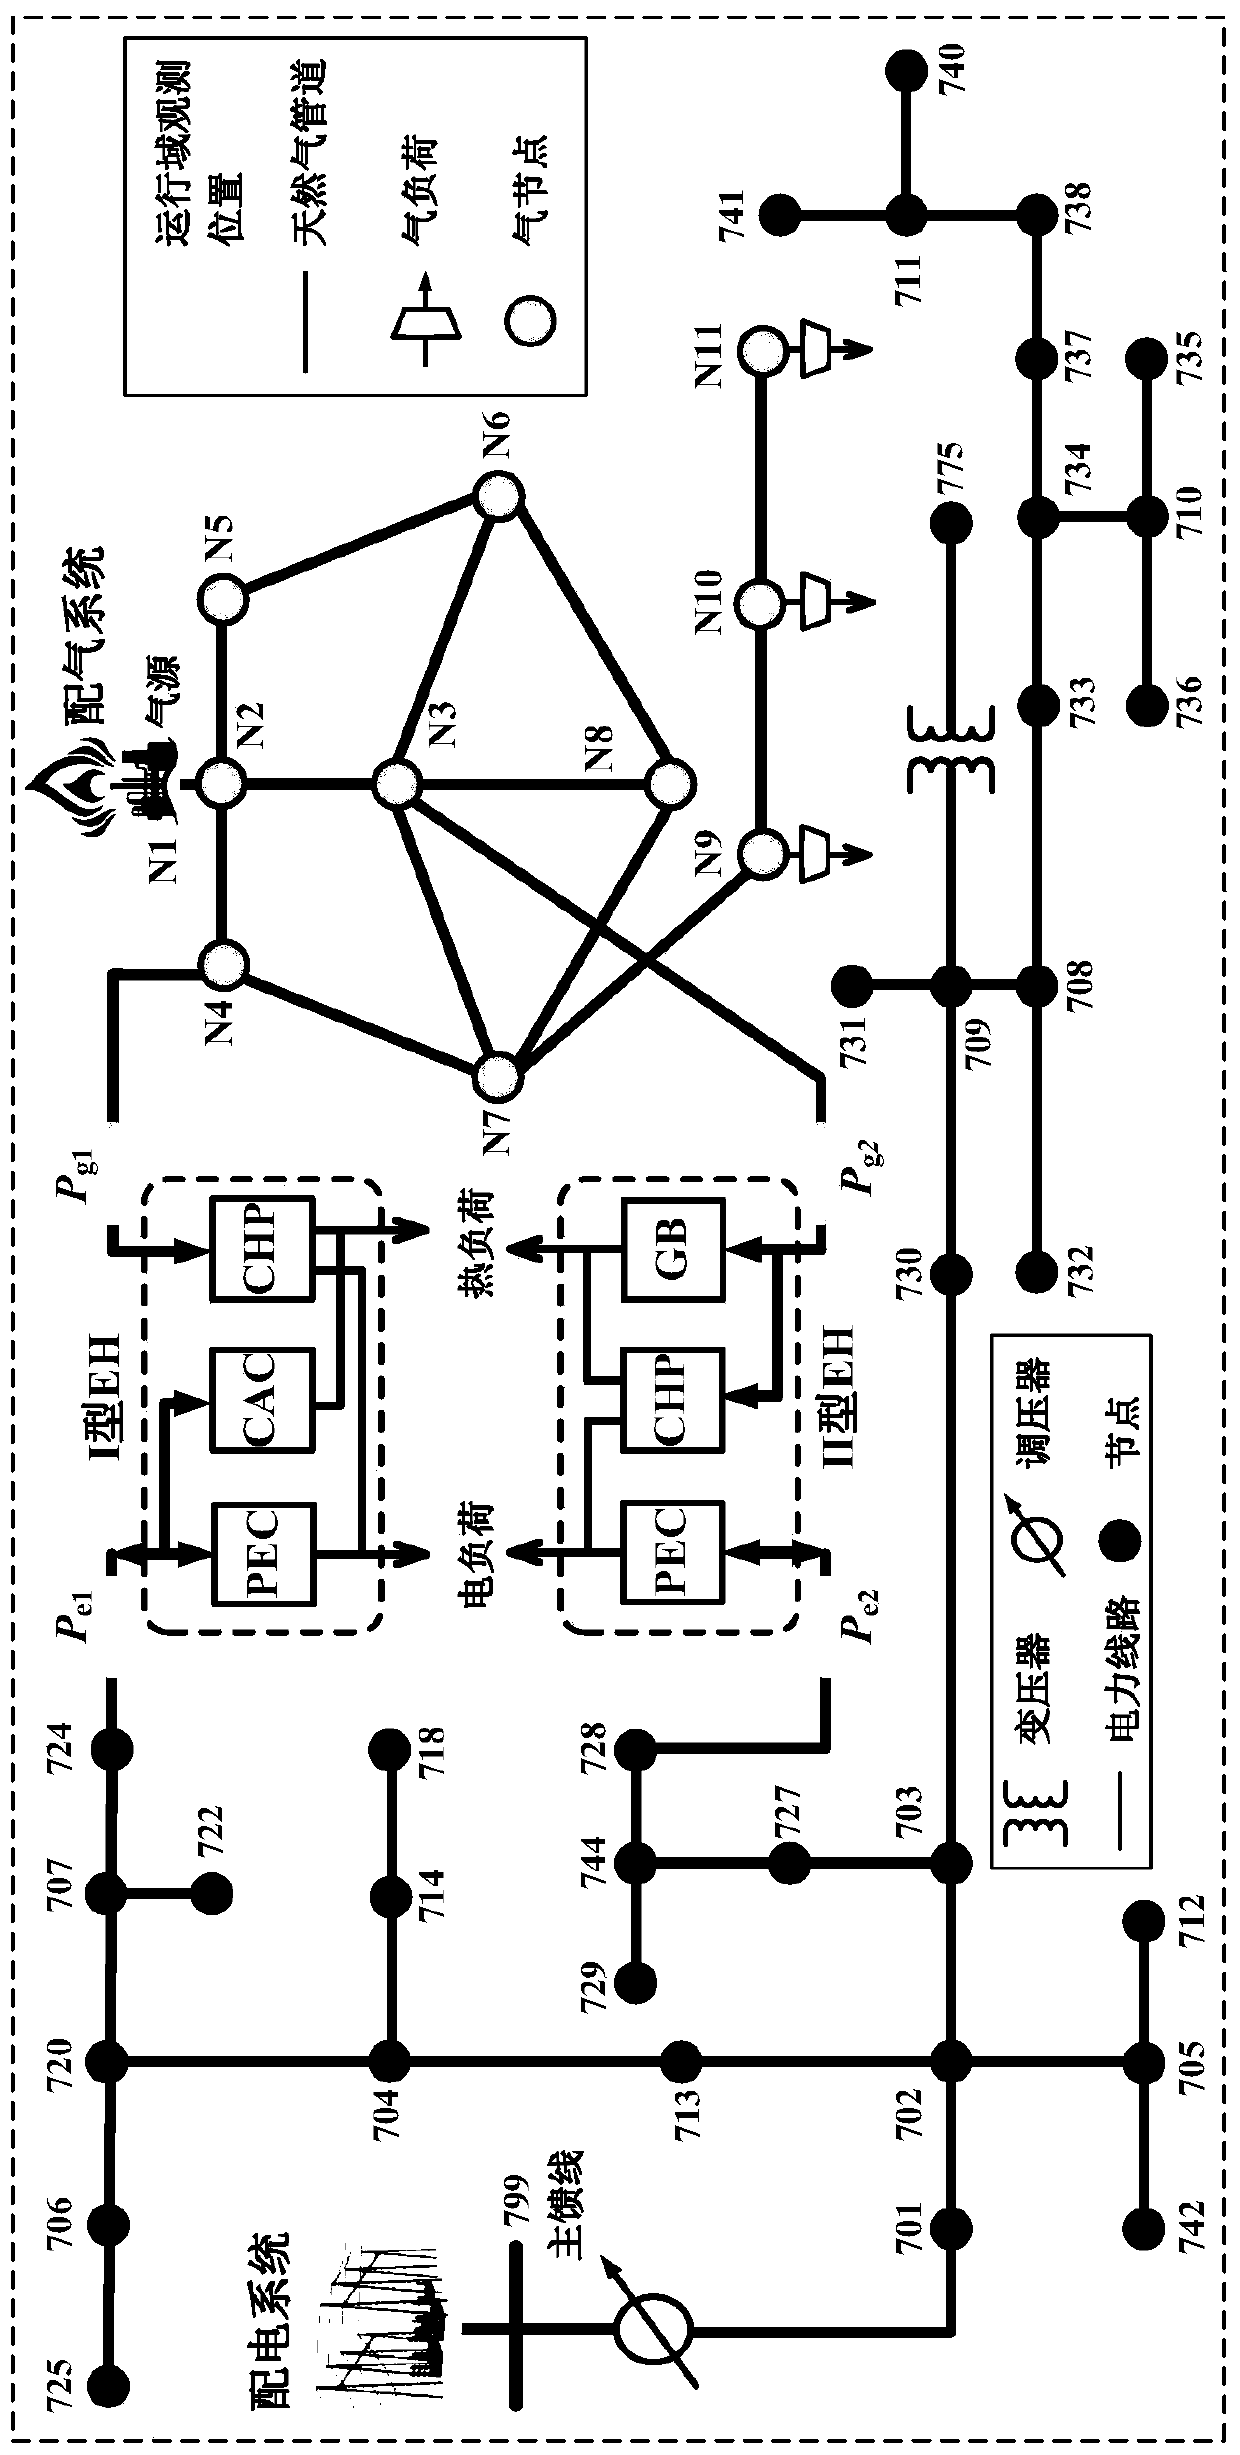 Comprehensive energy power distribution system operation domain modeling method